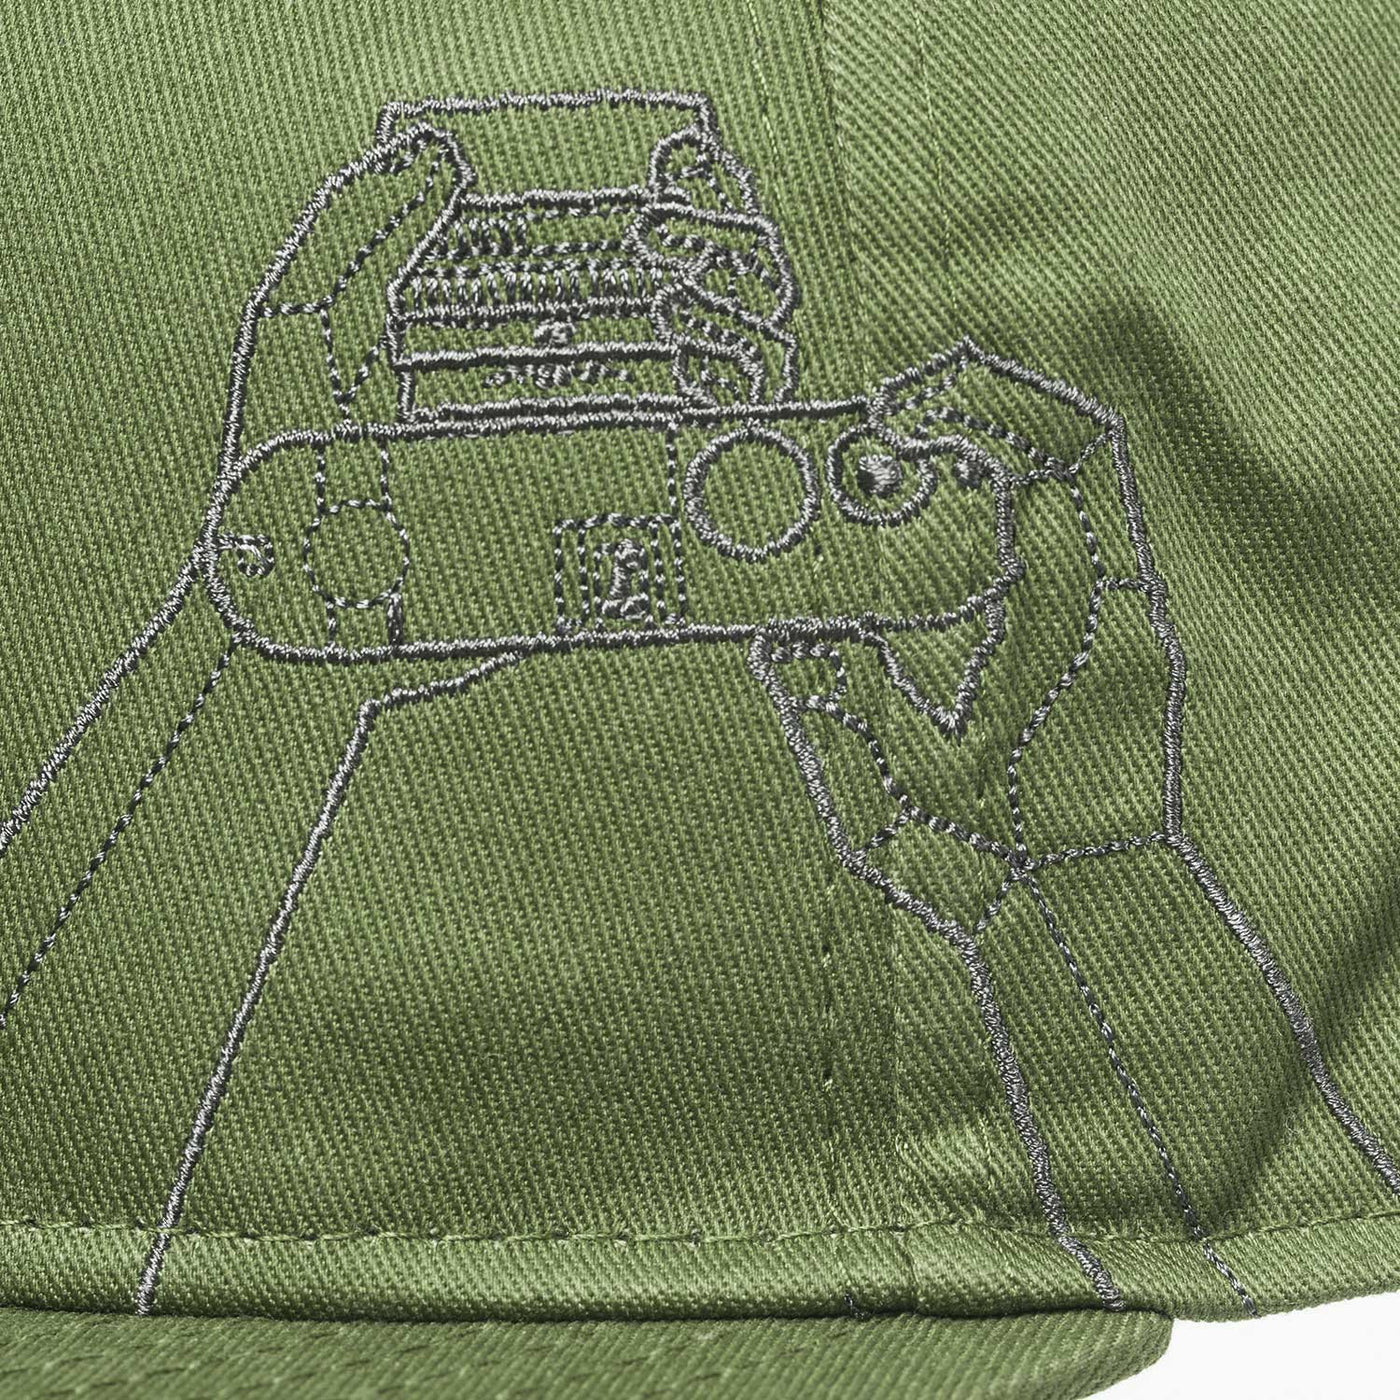 camera design stitching